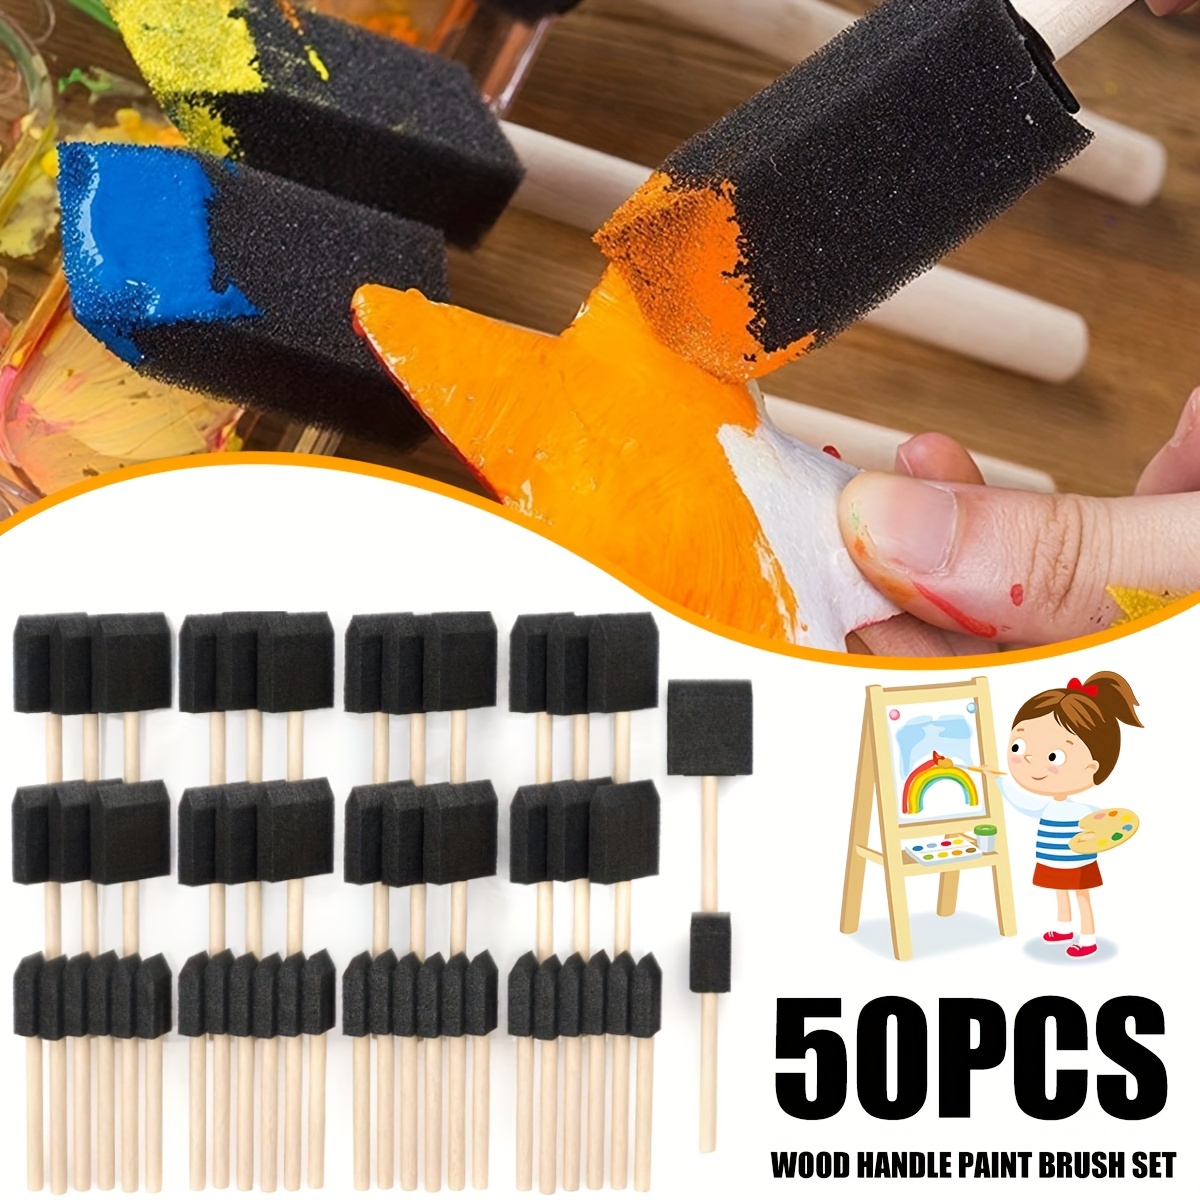 Foam Paint Brush, Sponge Brush Foam Paint Brushes, 50Pcs Sponge Paint Brush  Foam Brush Set for DIY Projects Art Classes